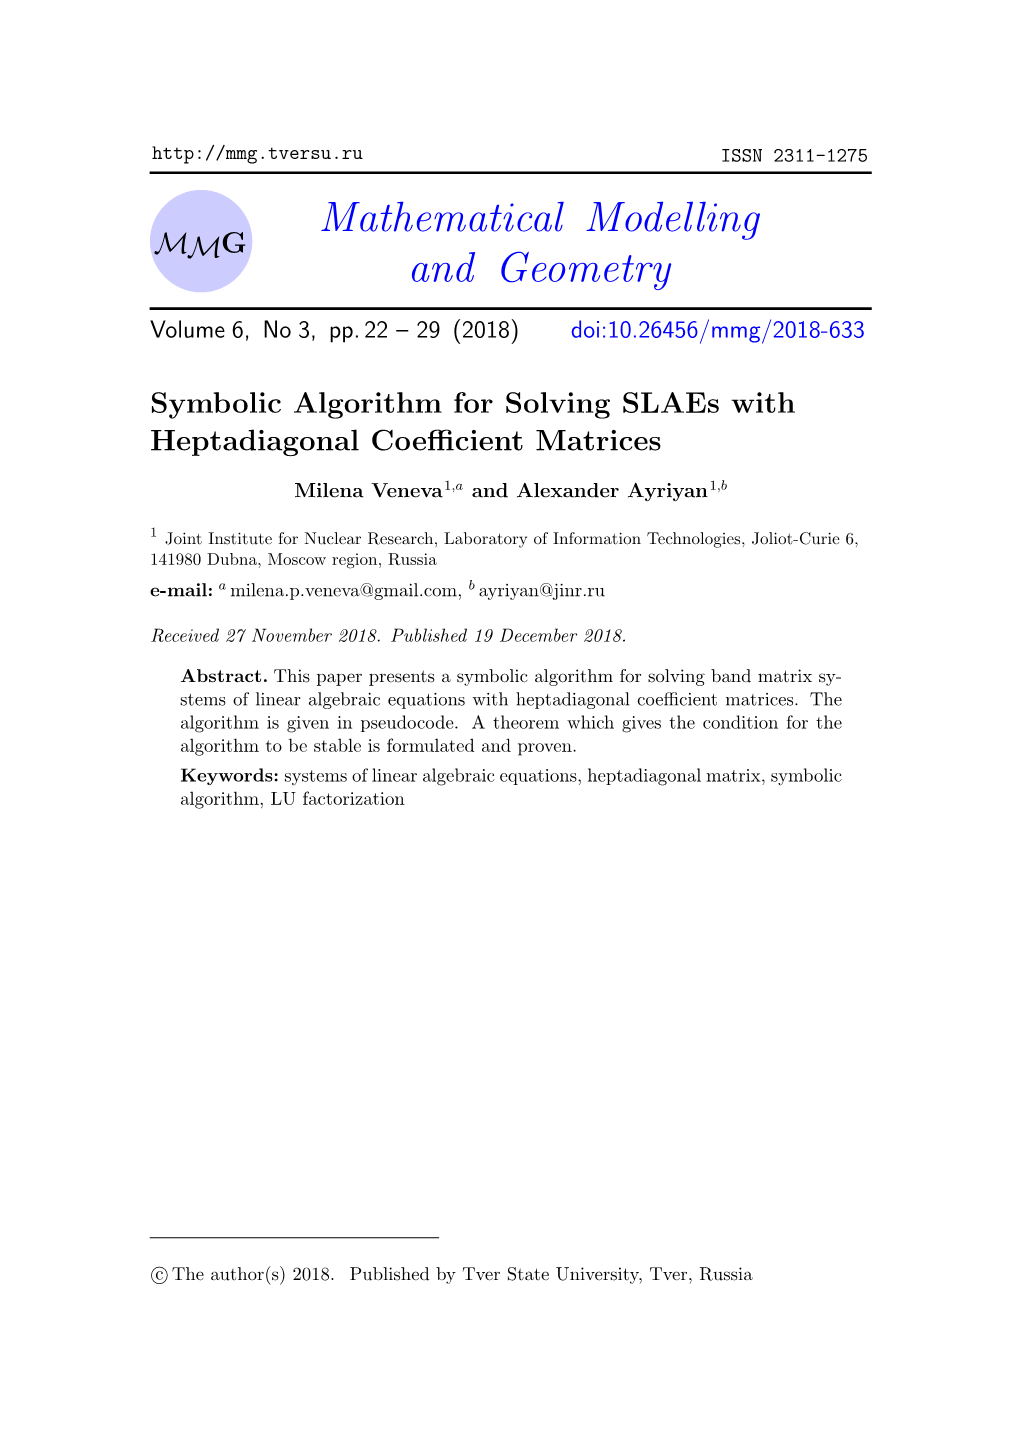 Symbolic Algorithm for Solving Slaes with Heptadiagonal Coefficient